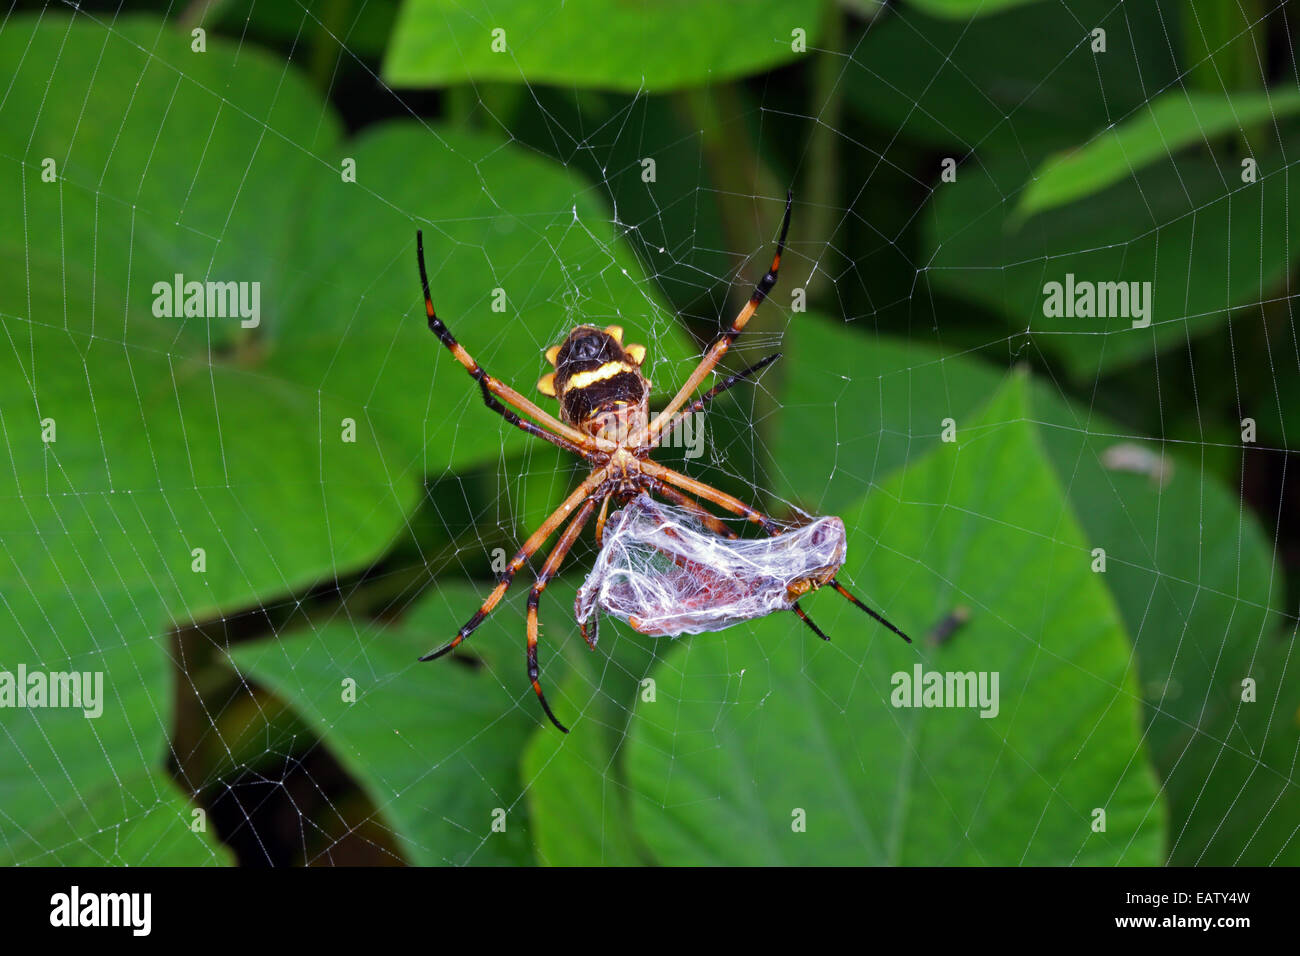 An argiope spider, Argiope argentata, wrapping a grasshopper in silk. Stock Photo